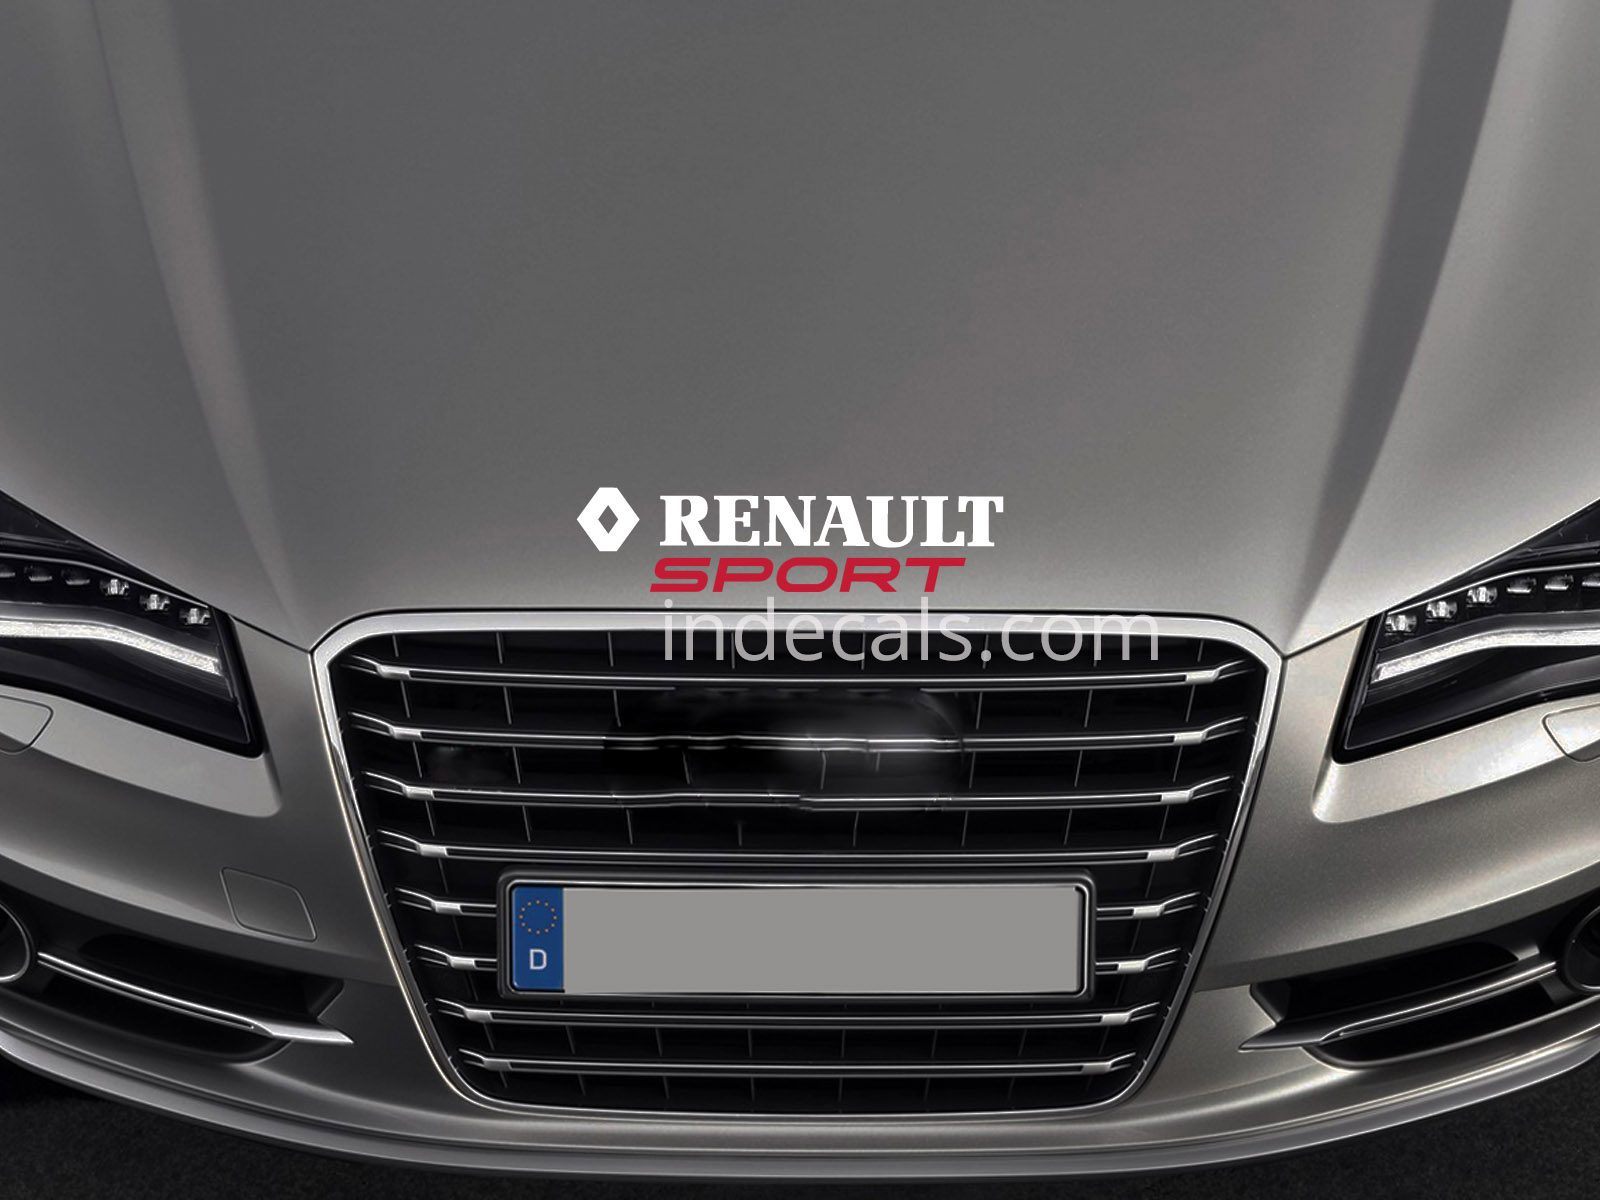 1 x Renault Sport Sticker for Bonnet - White & Red